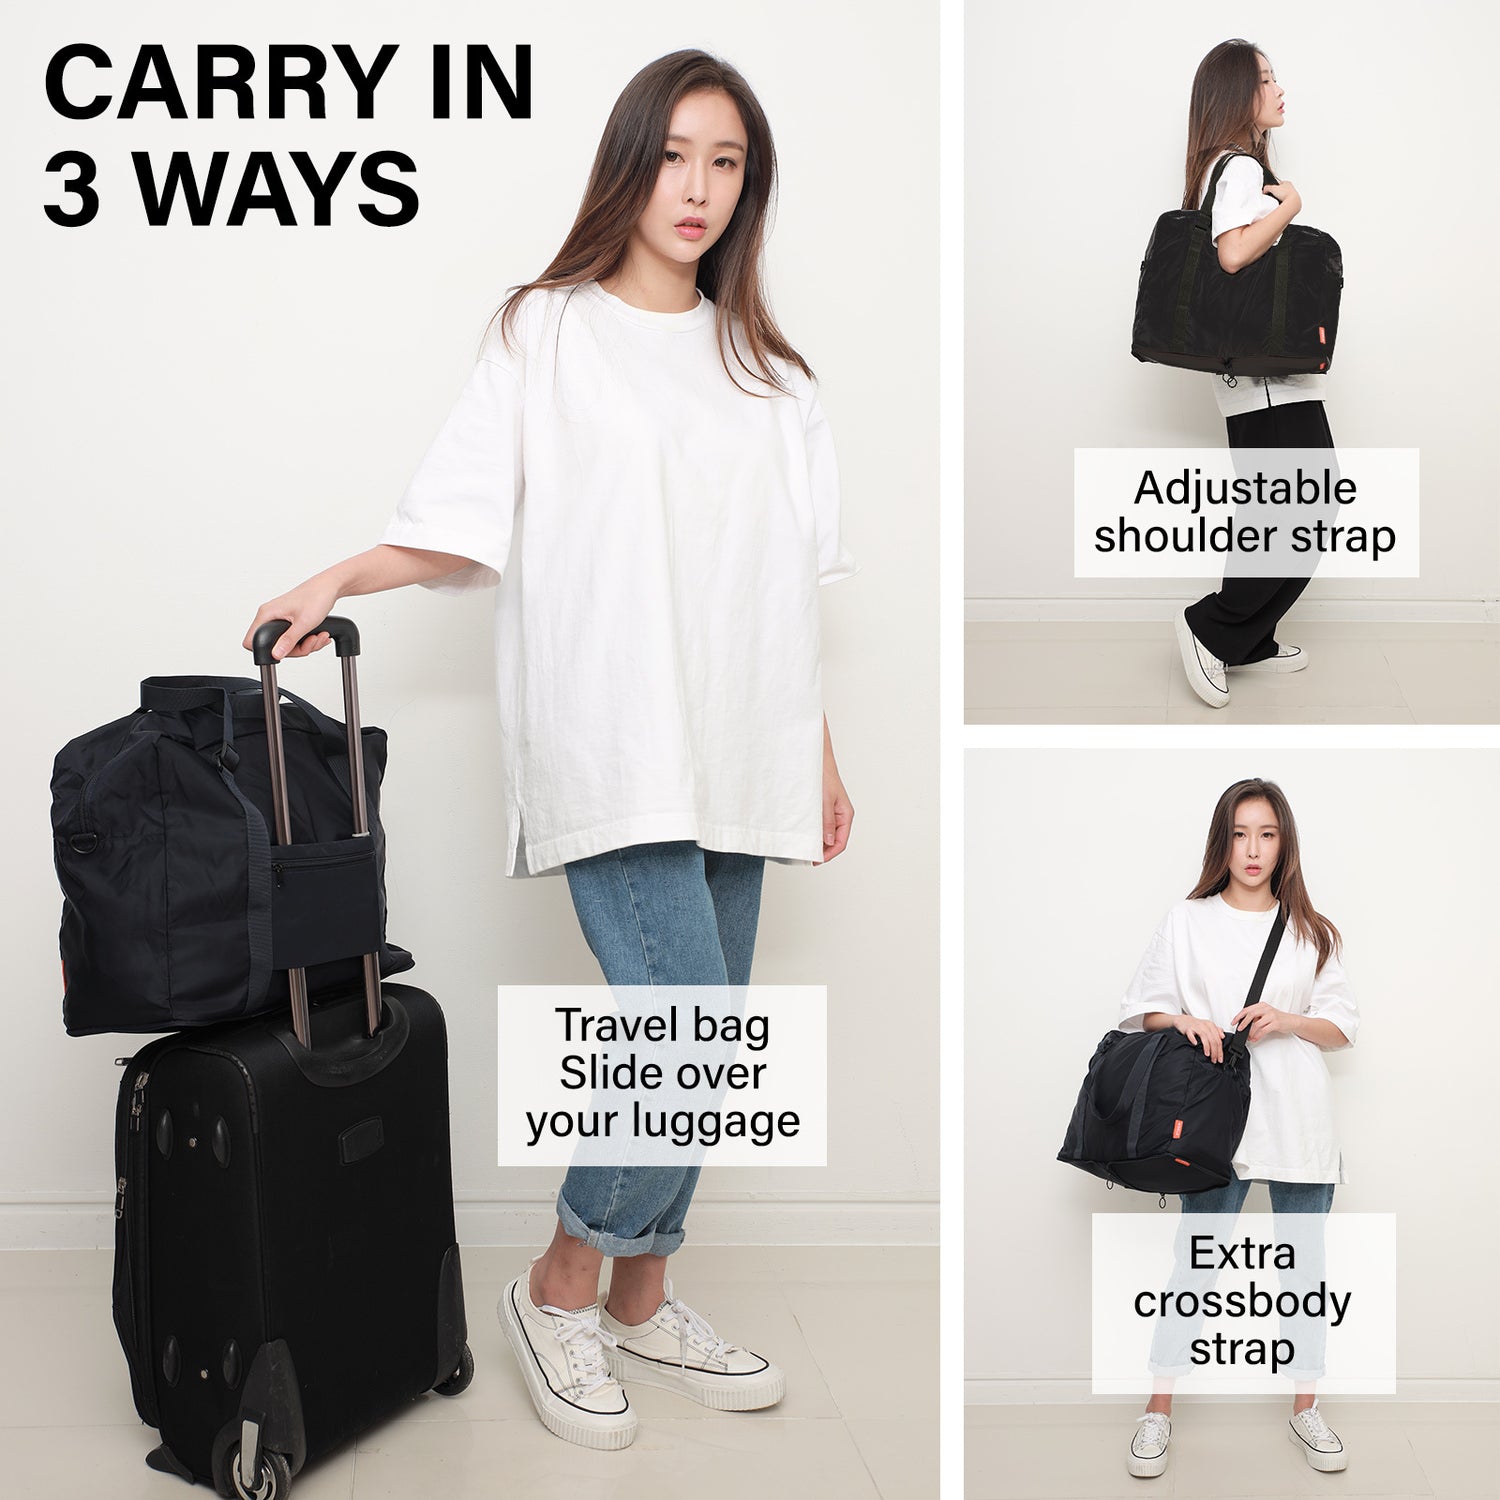 KOELE Navy Shopper Bag Travel Duffle Bag Foldable Laptop Luggage KO-BOSTON-Duffle Bags-PEROZ Accessories